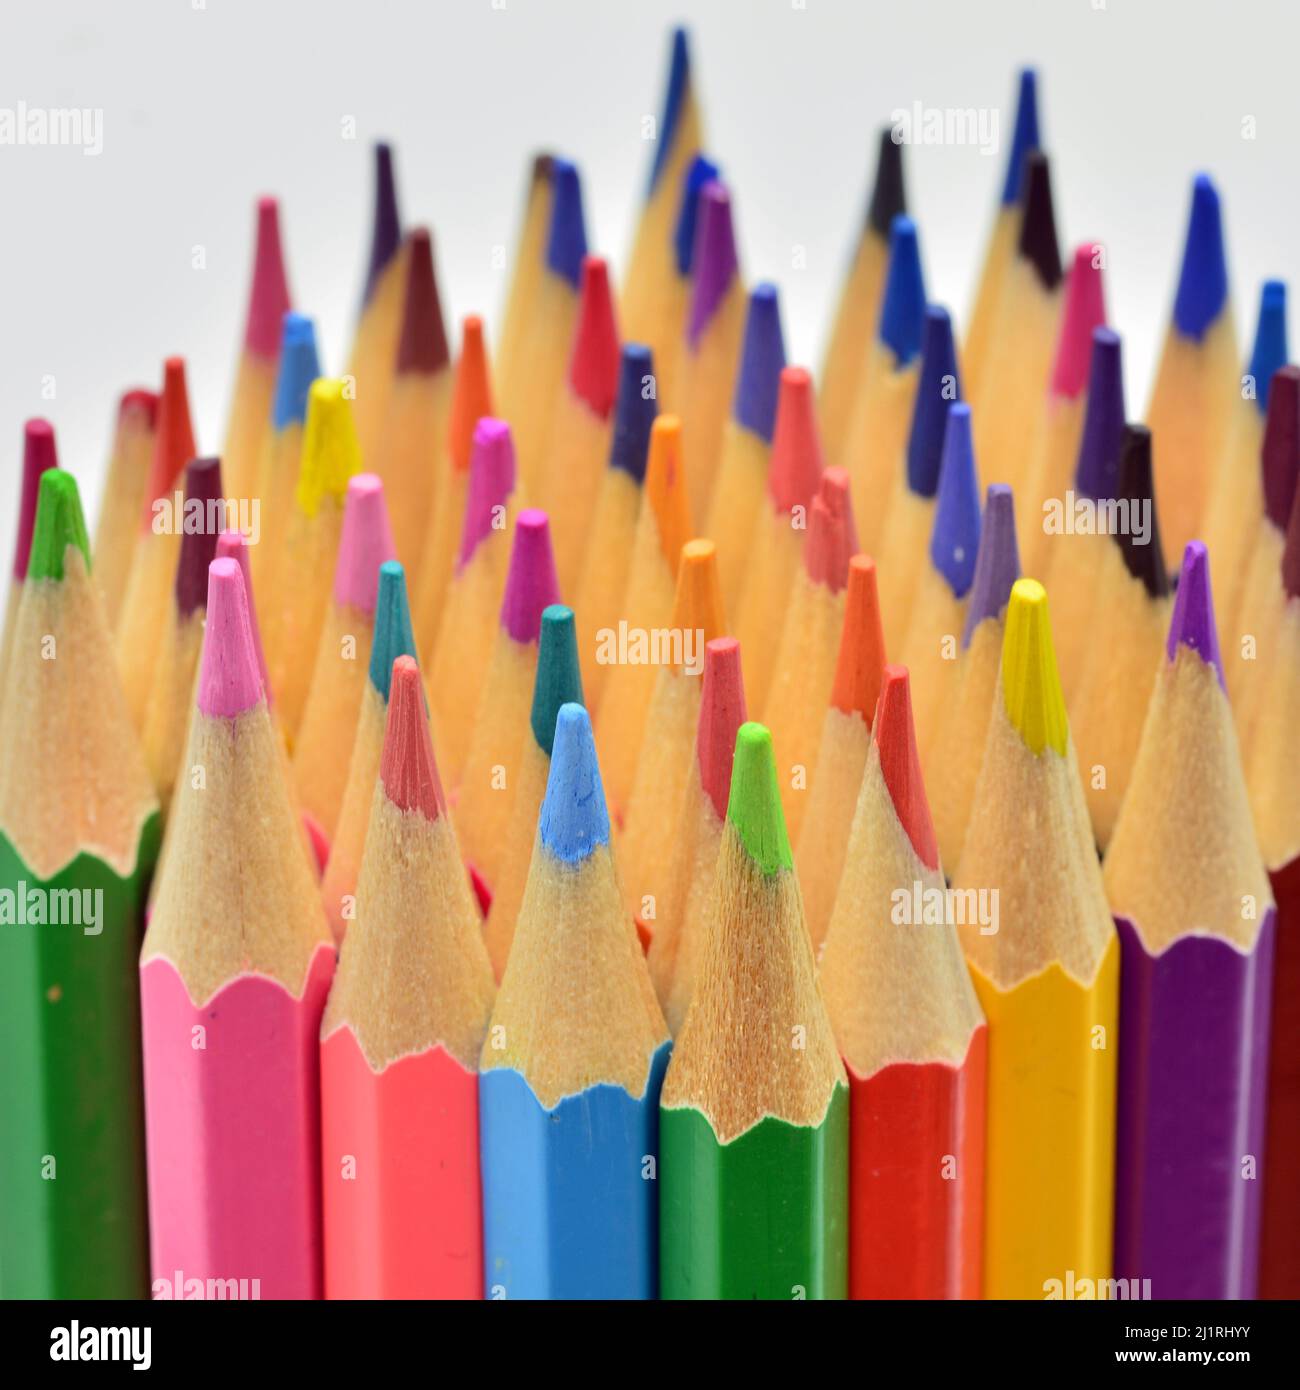 detalles de puntas de lápices de colores, aislado sobre fondo blanco Stock Photo